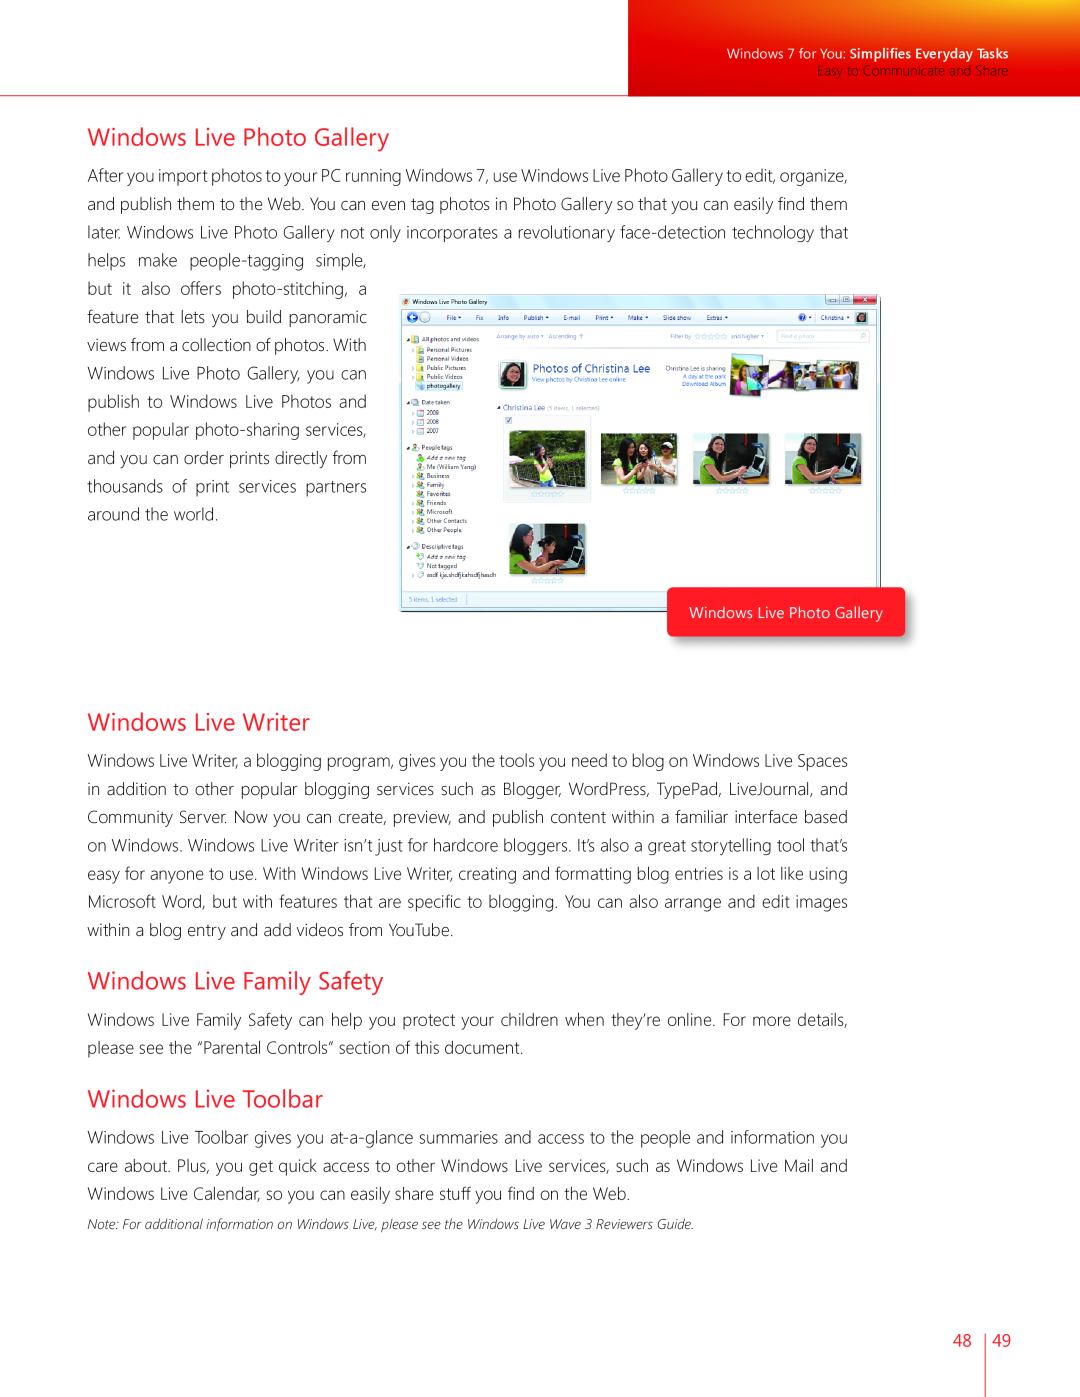 Microsoft GLC01878 manual Windows Live Photo Gallery, Windows Live Writer, Windows Live Family Safety, Windows Live Toolbar 